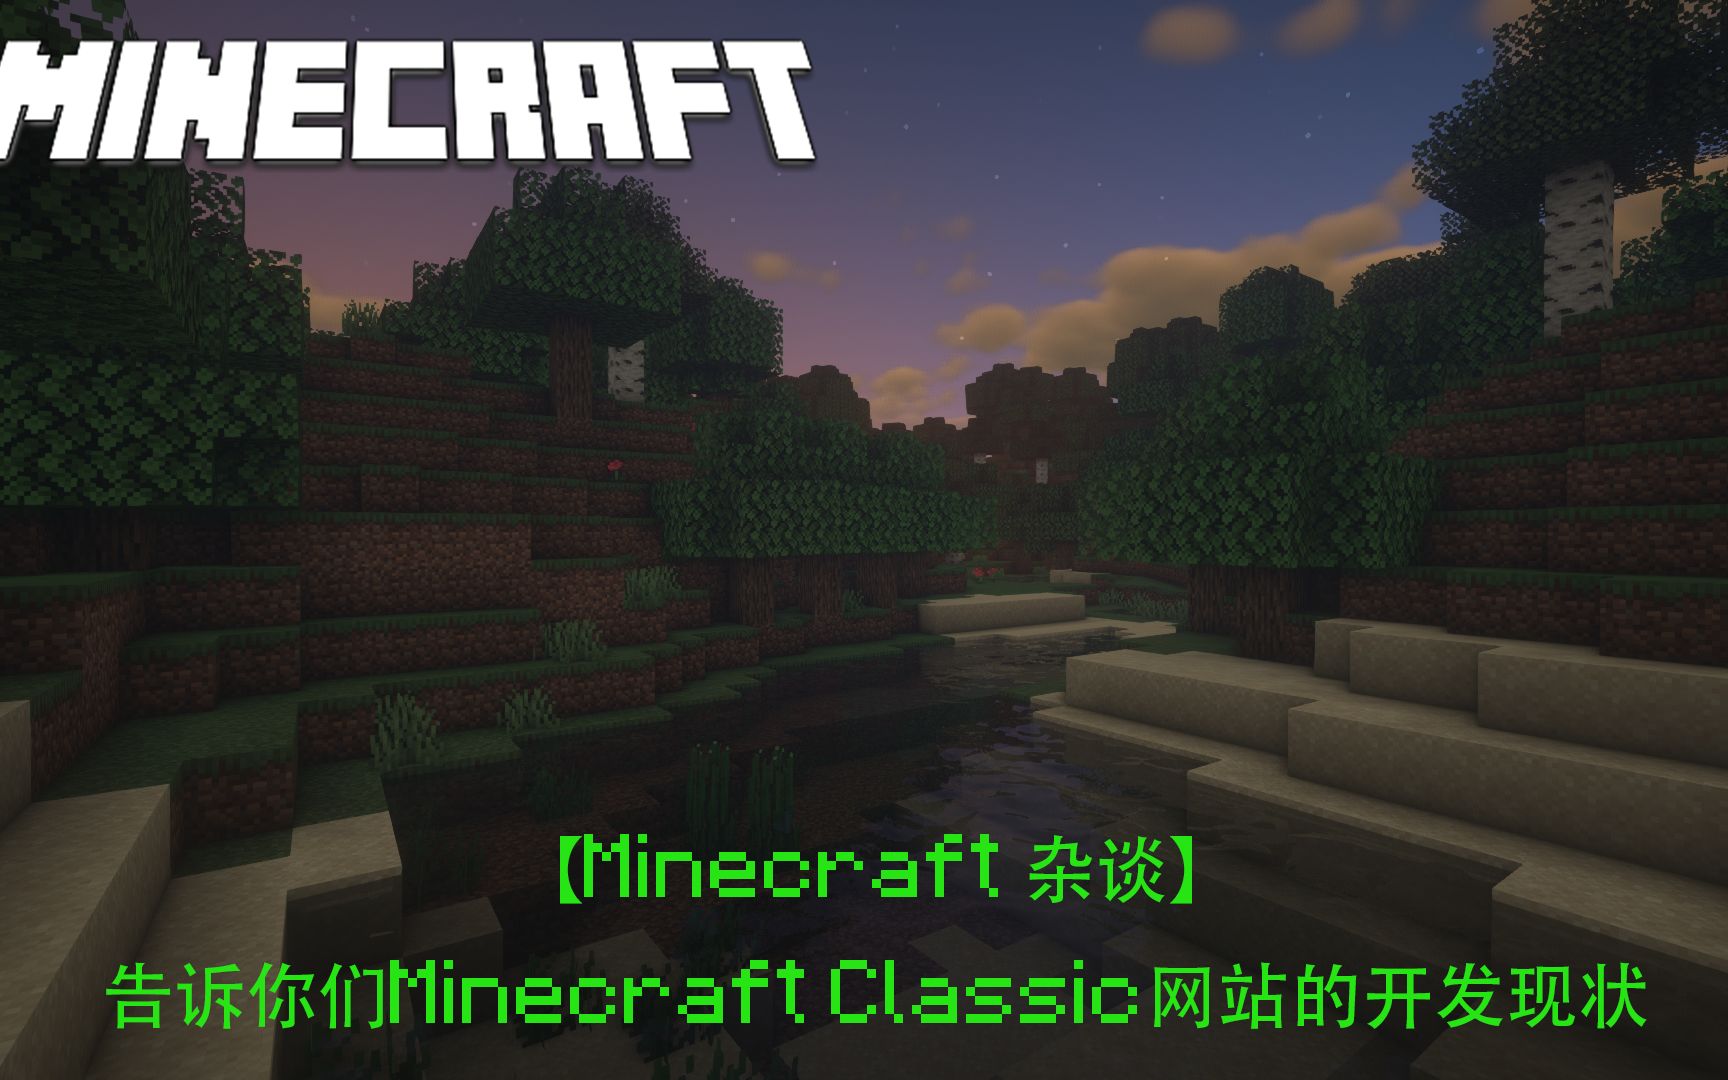 Minecraft杂谈小视频版 Minecraft Classic网站开发现状 第五集 哔哩哔哩 つロ干杯 Bilibili